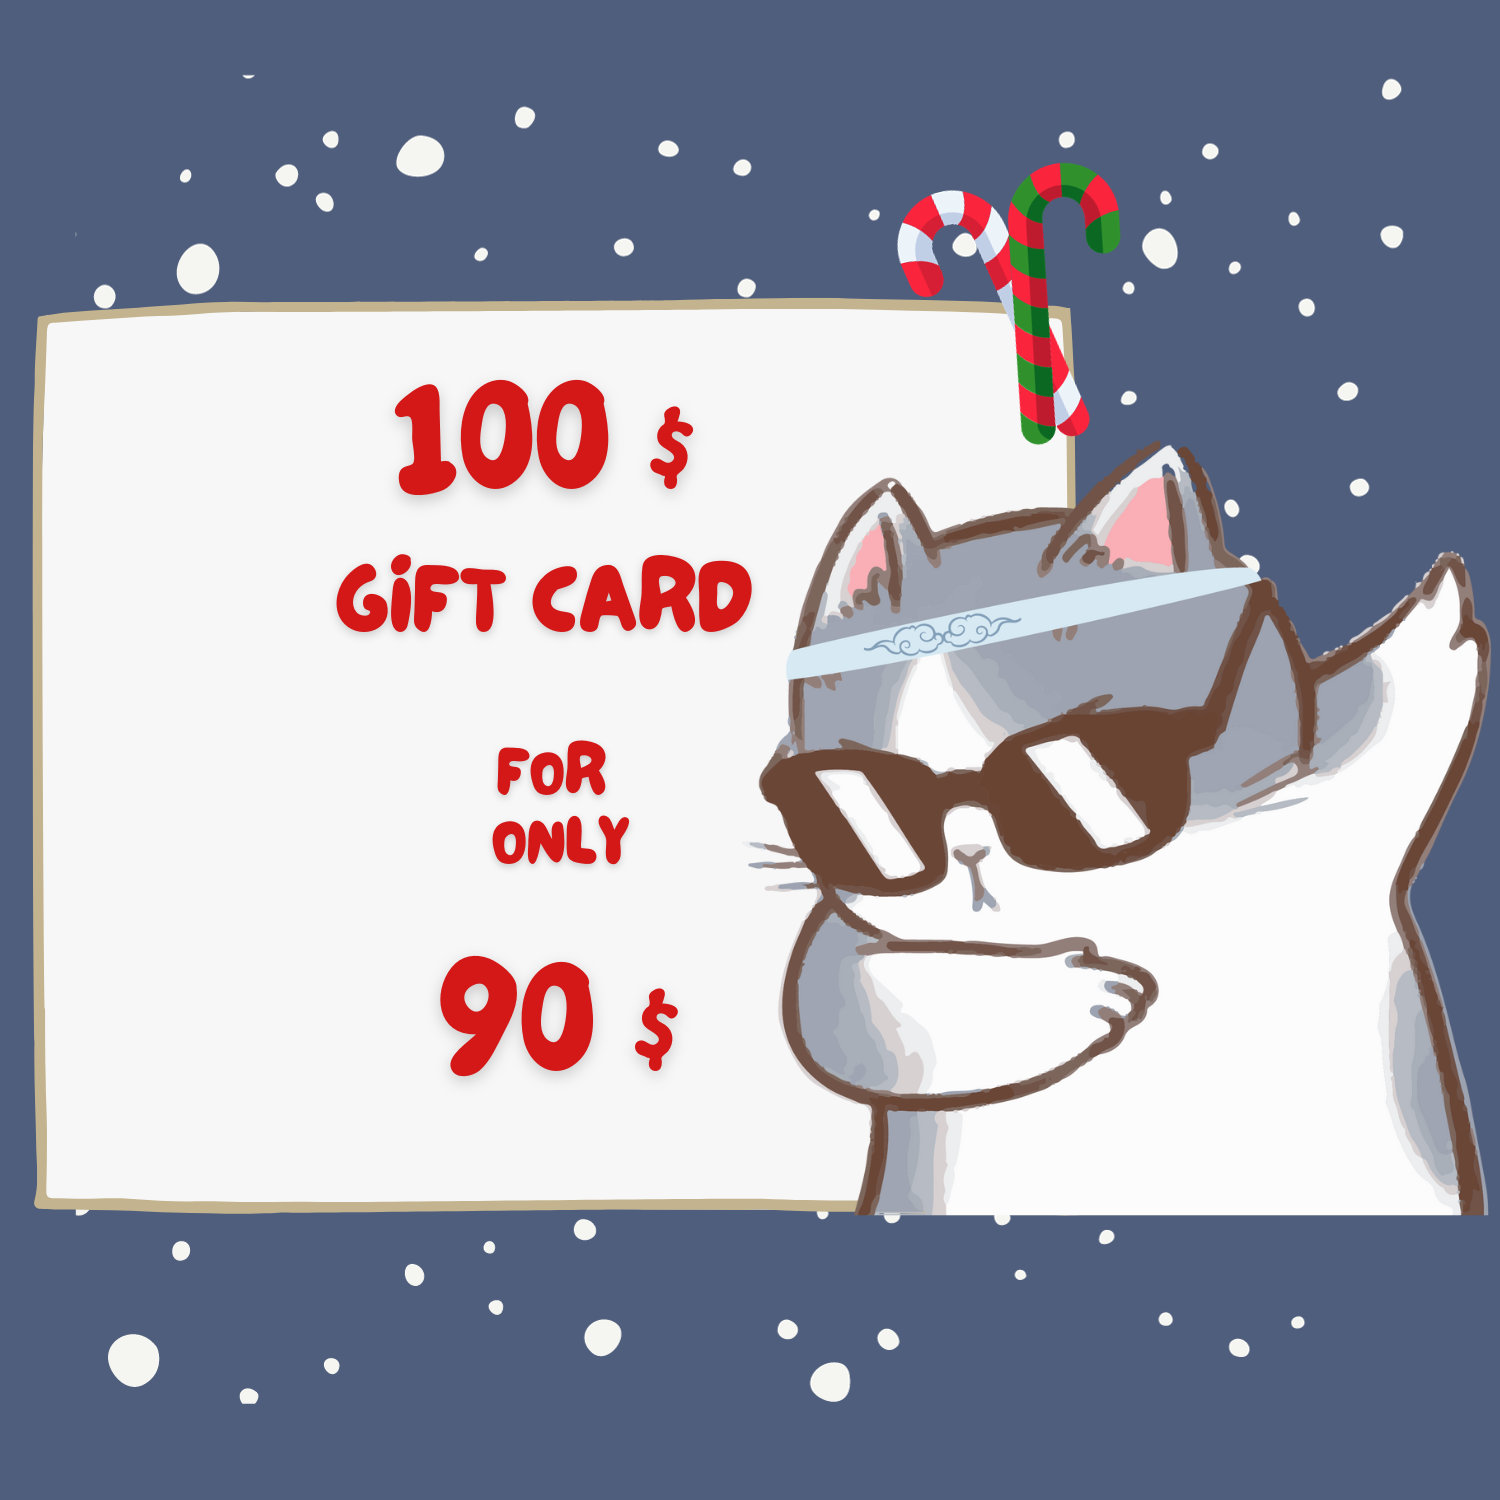 100 $ Gift Card